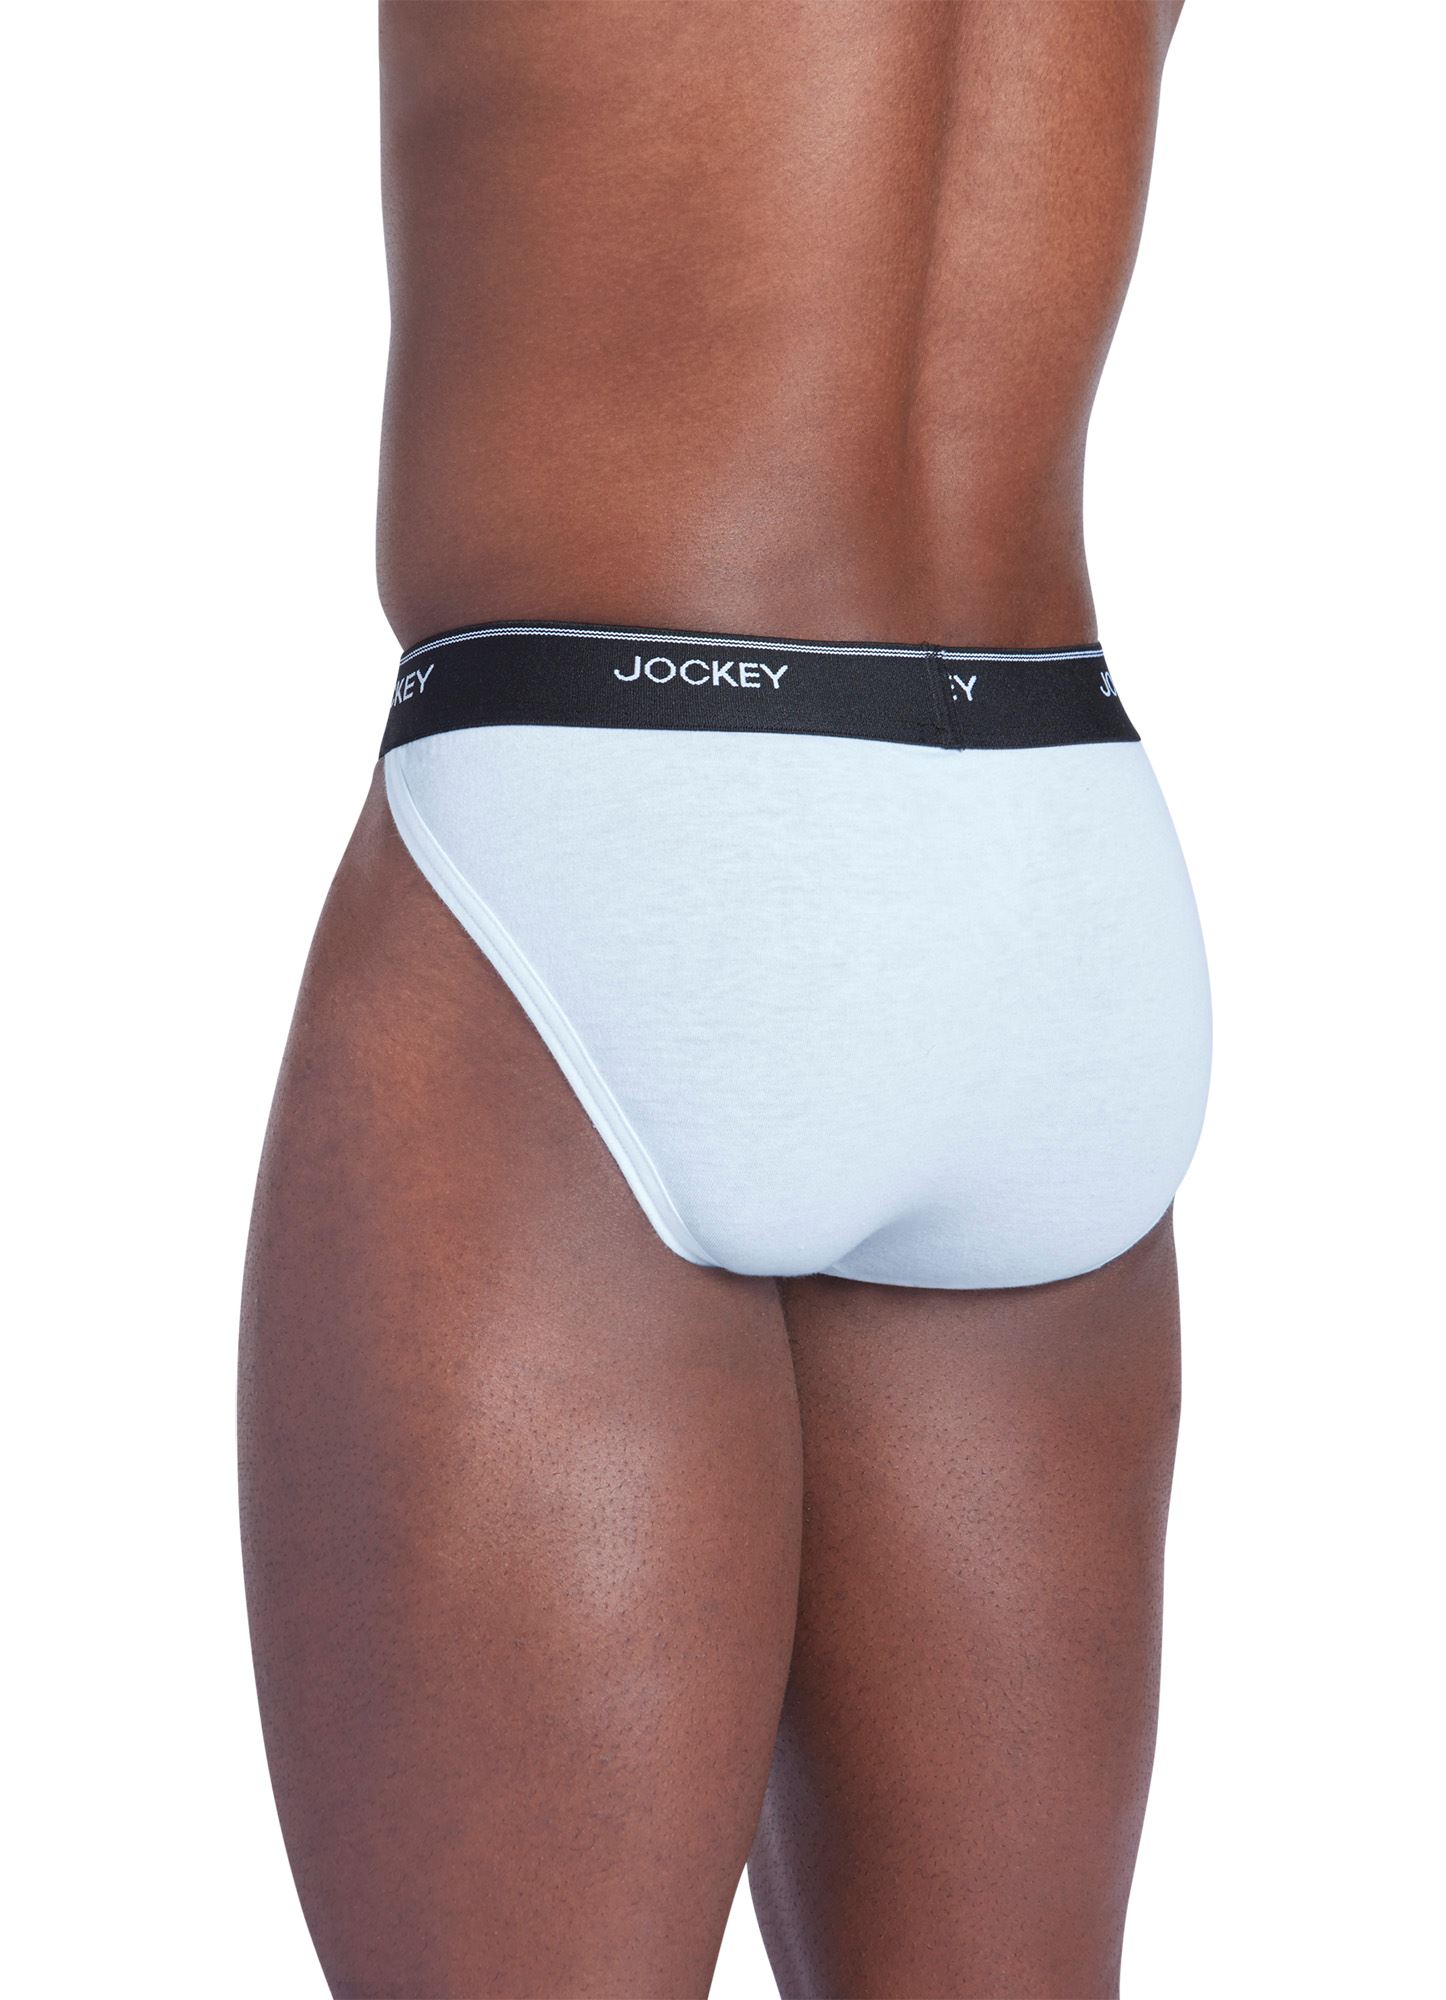 2} JOCKEY ELANCE String Bikini Men's Underwear X-LARGE (40-42